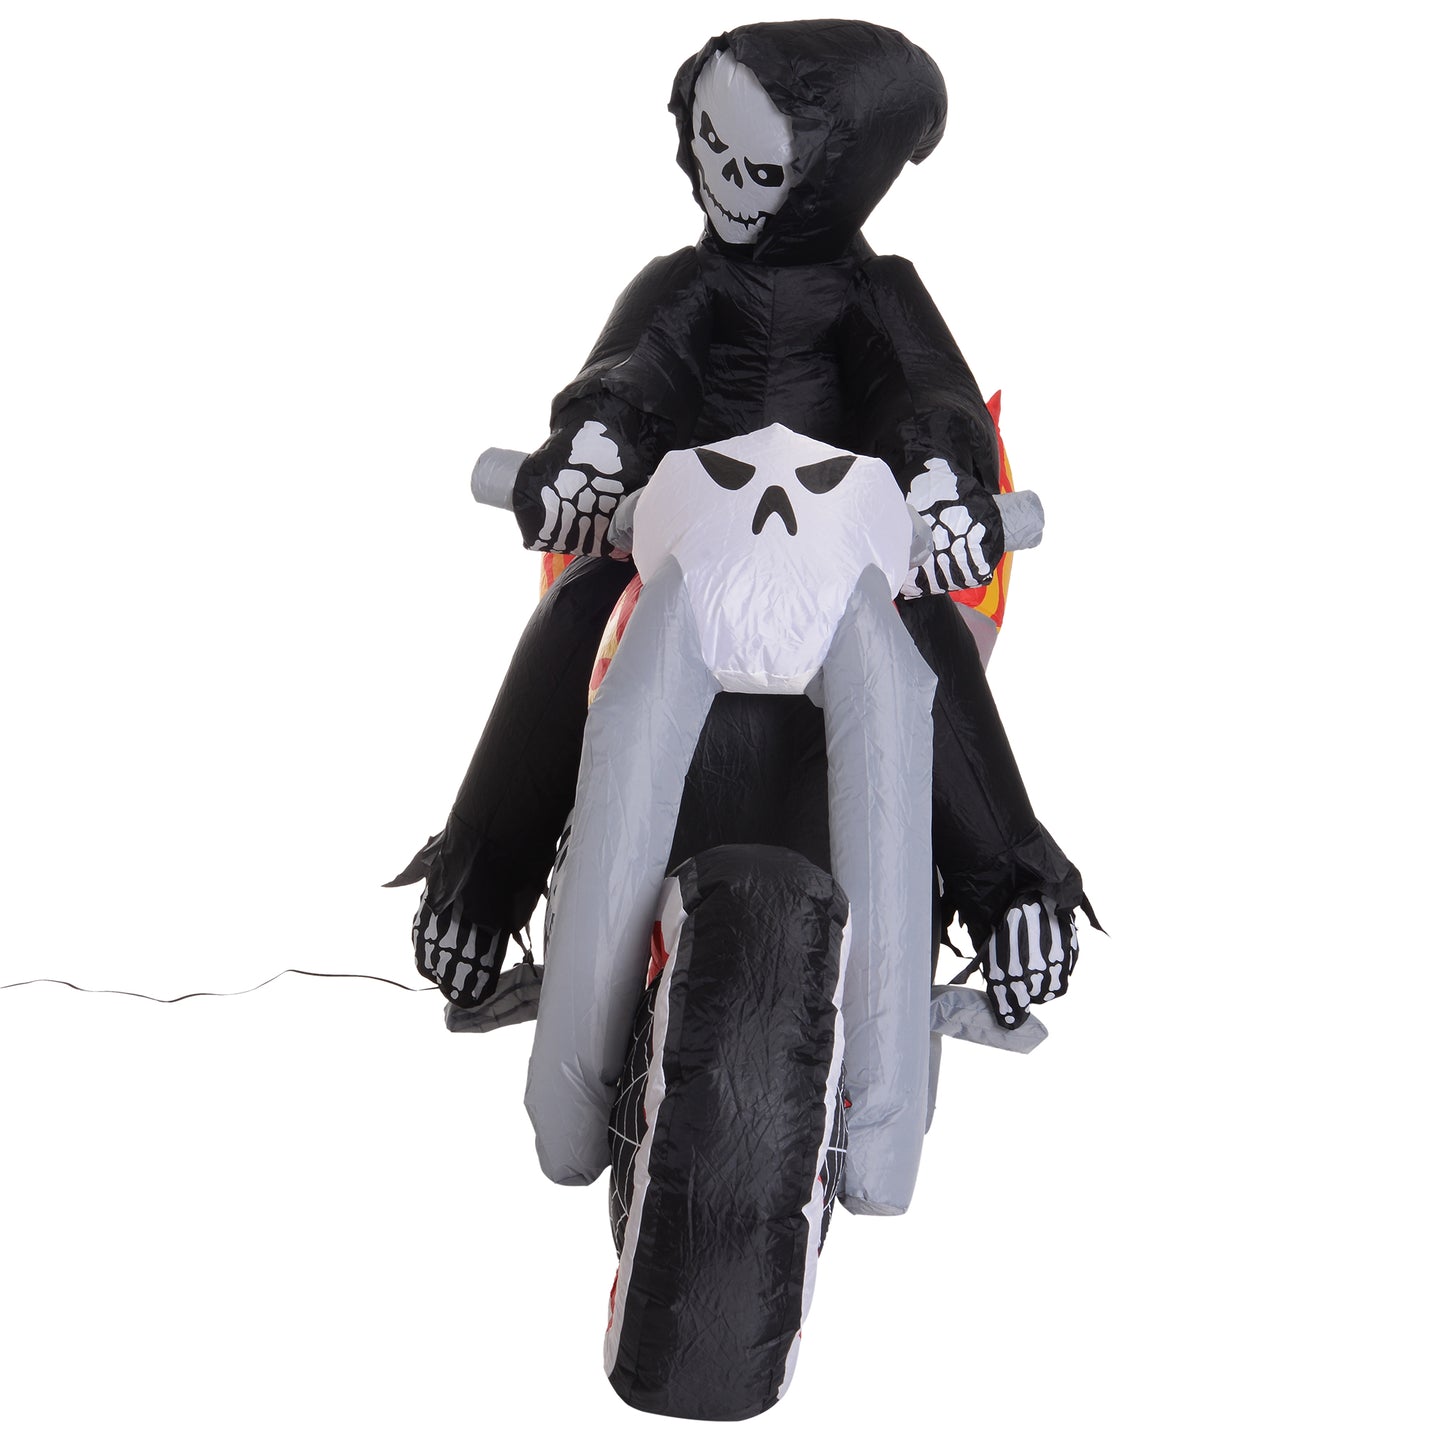 HOMCOM 180L x 55W x 120H cm Inflatable Grim Reaper on Motorcycle Halloween Decoration-Multicolour